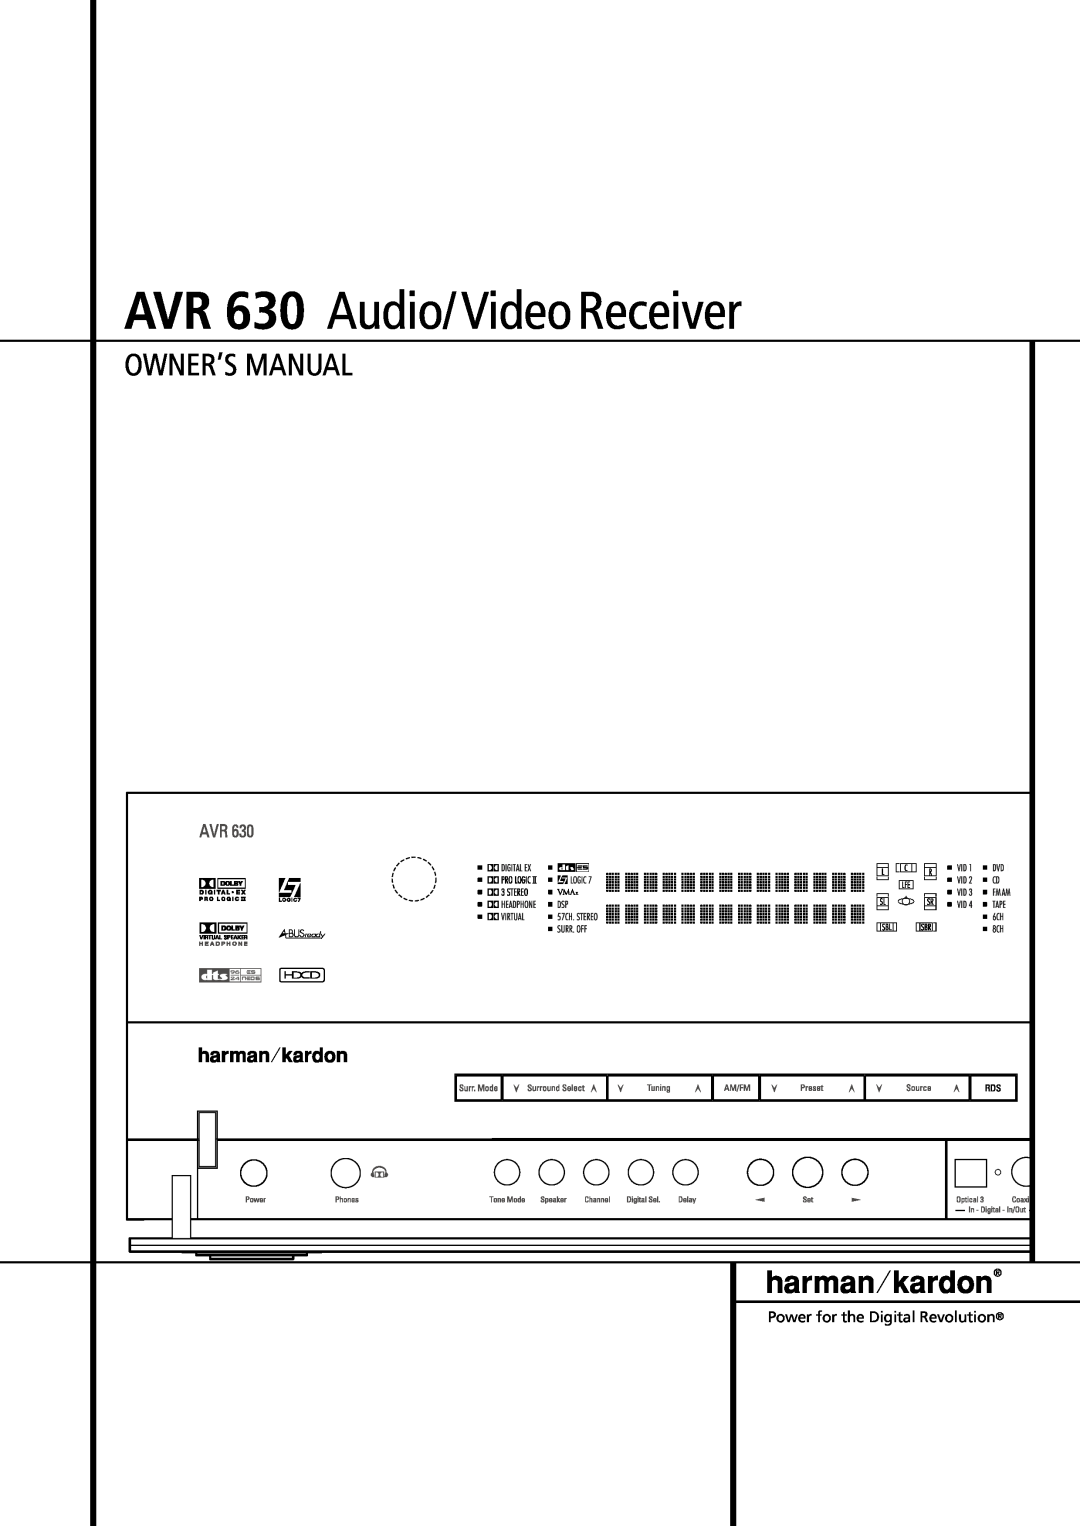 Harman-Kardon owner manual AVR 630 Audio/ Video Receiver 